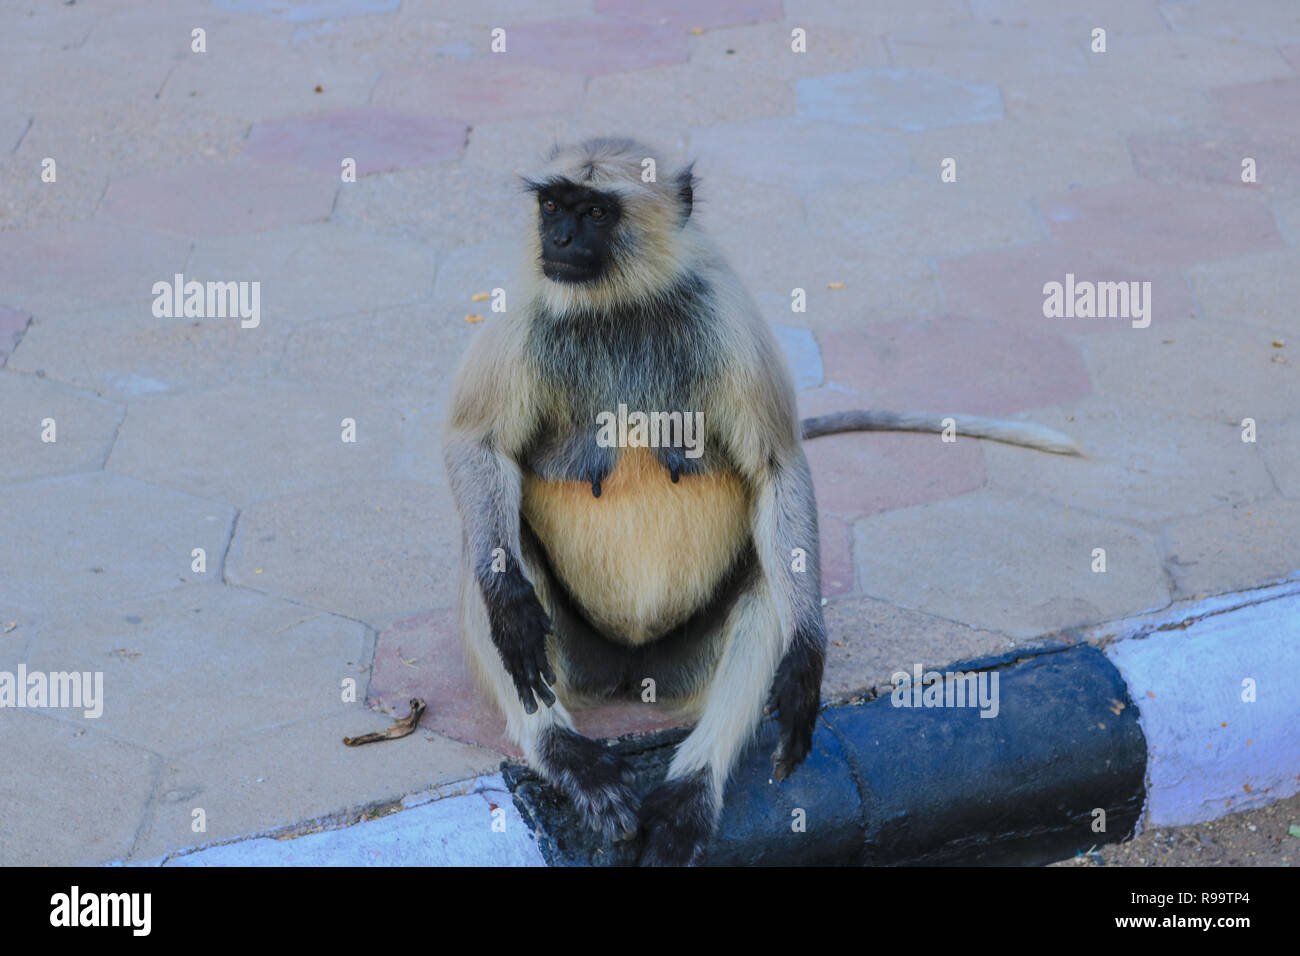 A Monkey sitting at the roadside in Mandore garden, Jodhpur, Rajasthan Stock Photo